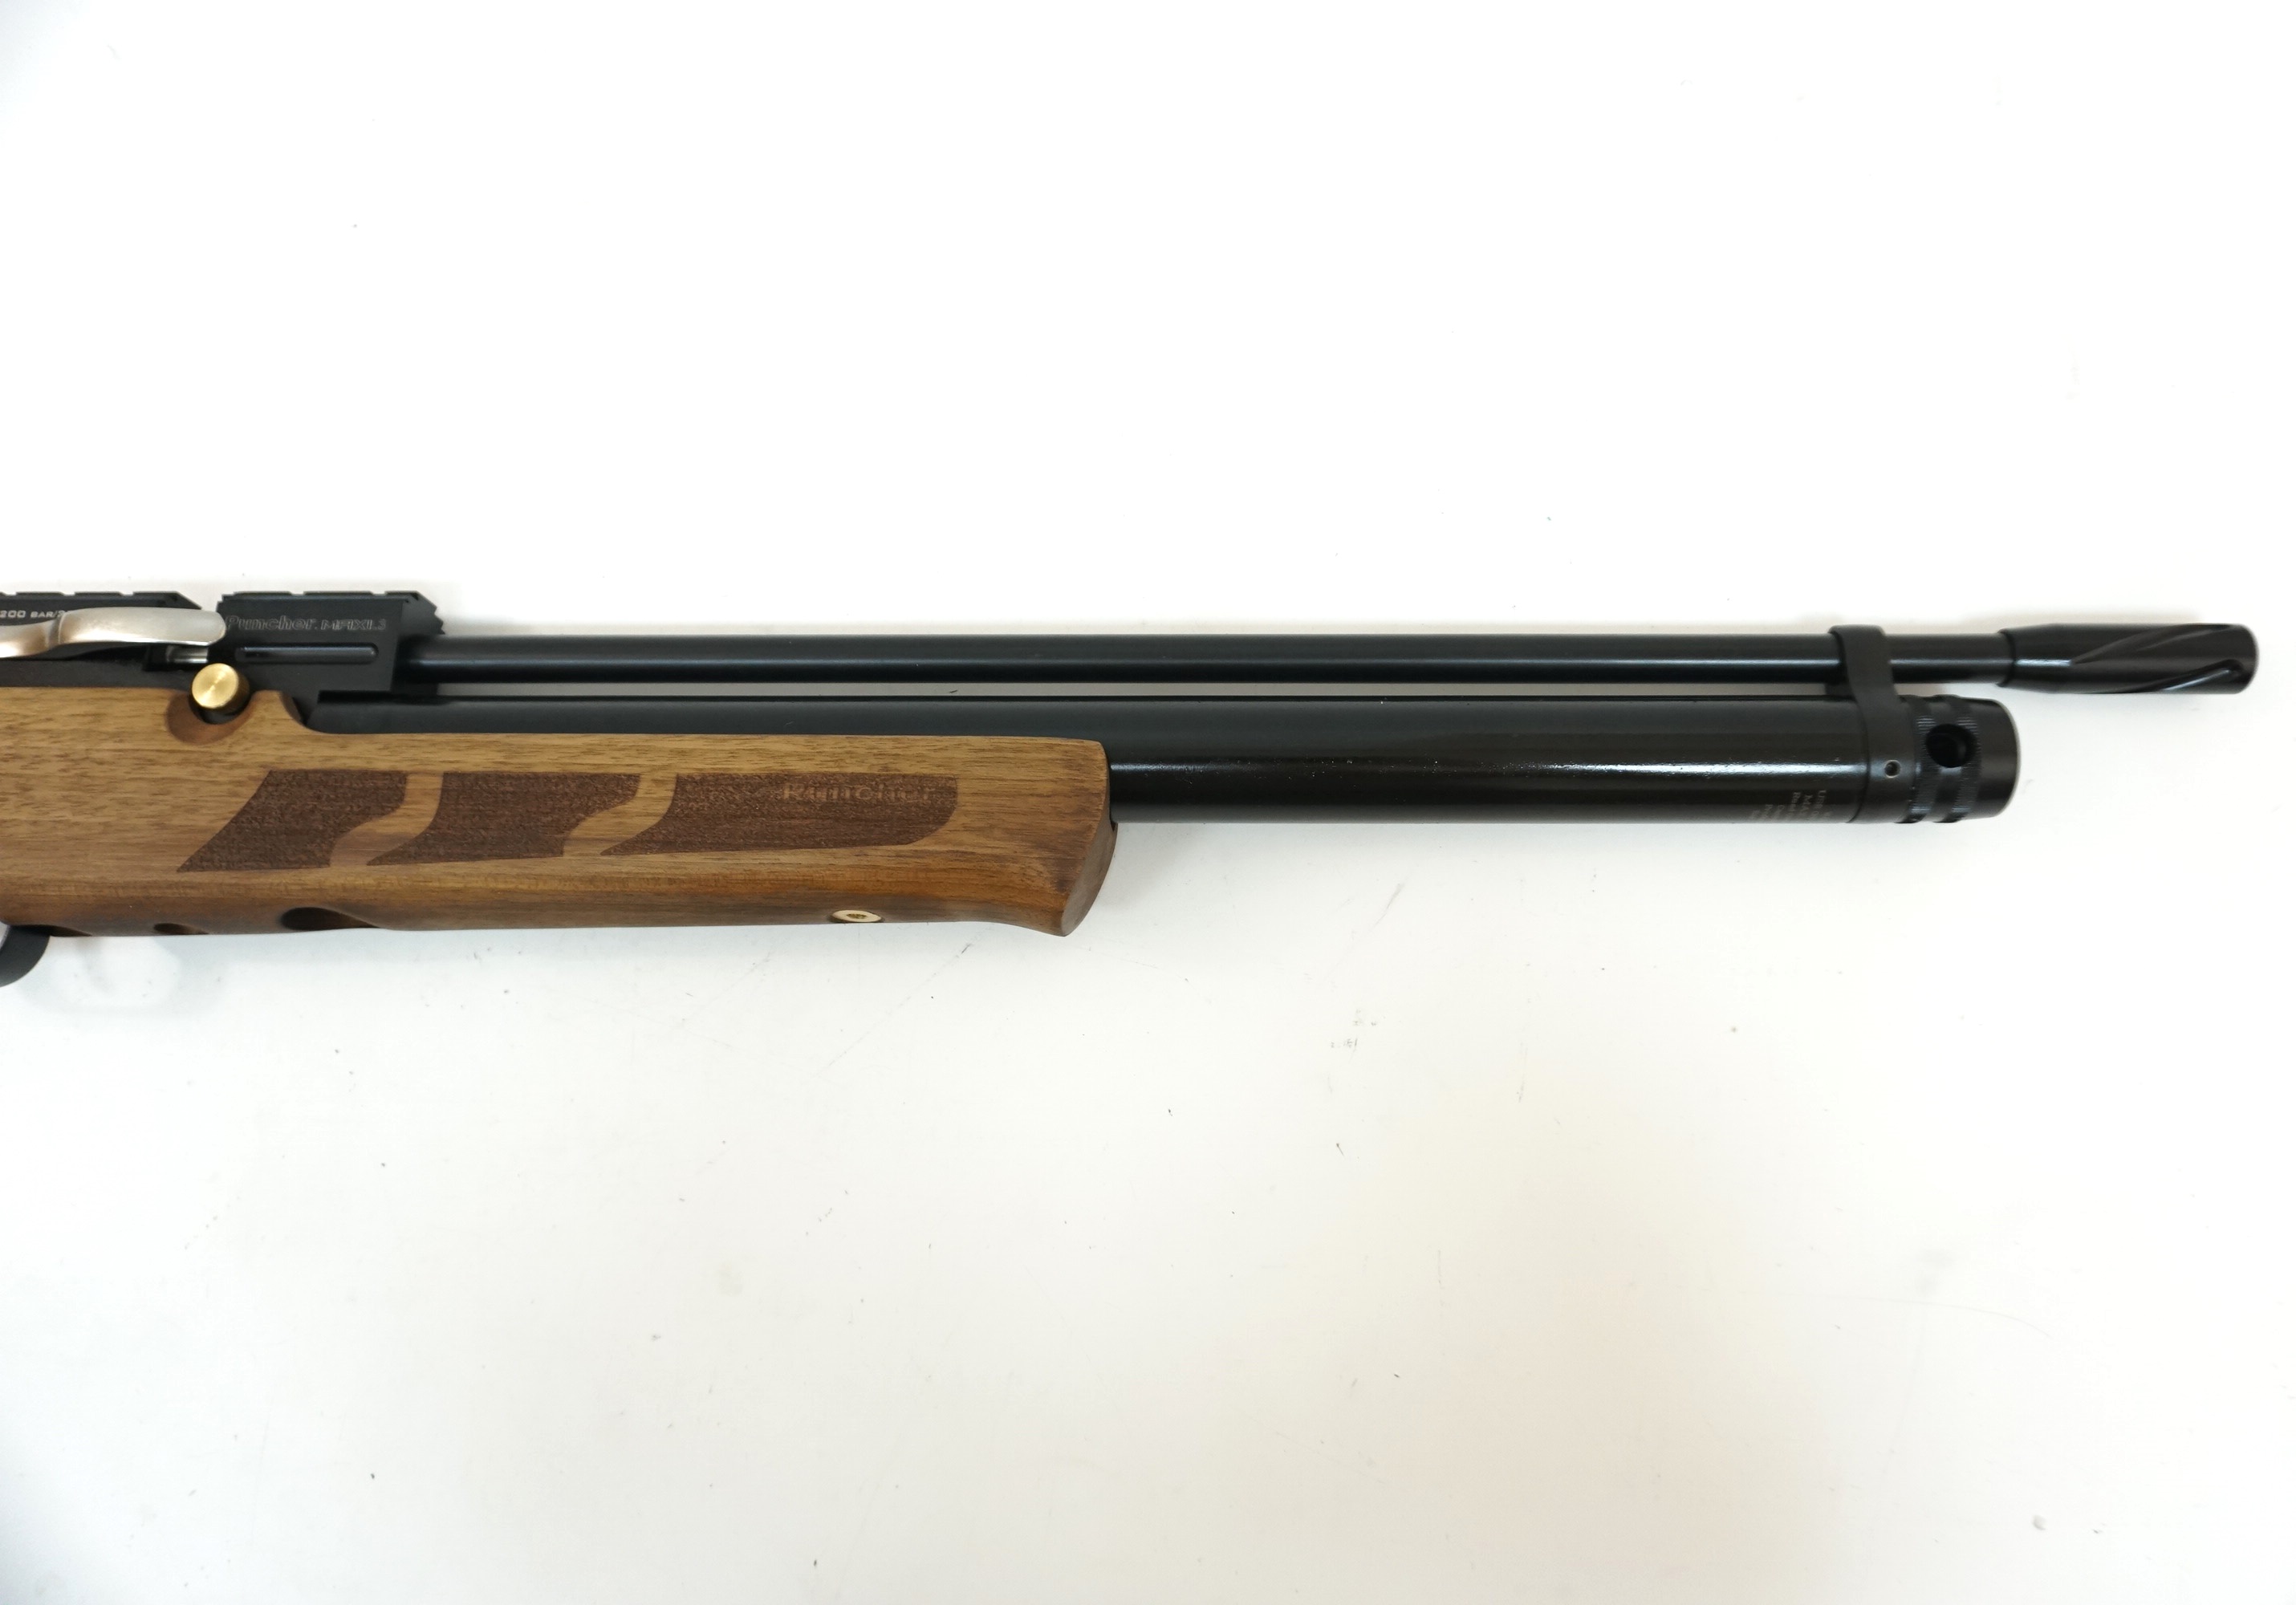 Крал панчер макси 3 6.35. PCP винтовка Kral Puncher Maxi 3. Пневматическая винтовка Kral Puncher Maxi 3 5,5 мм. Пневматическая винтовка Kral Puncher Maxi 3 6.35 мм орех.